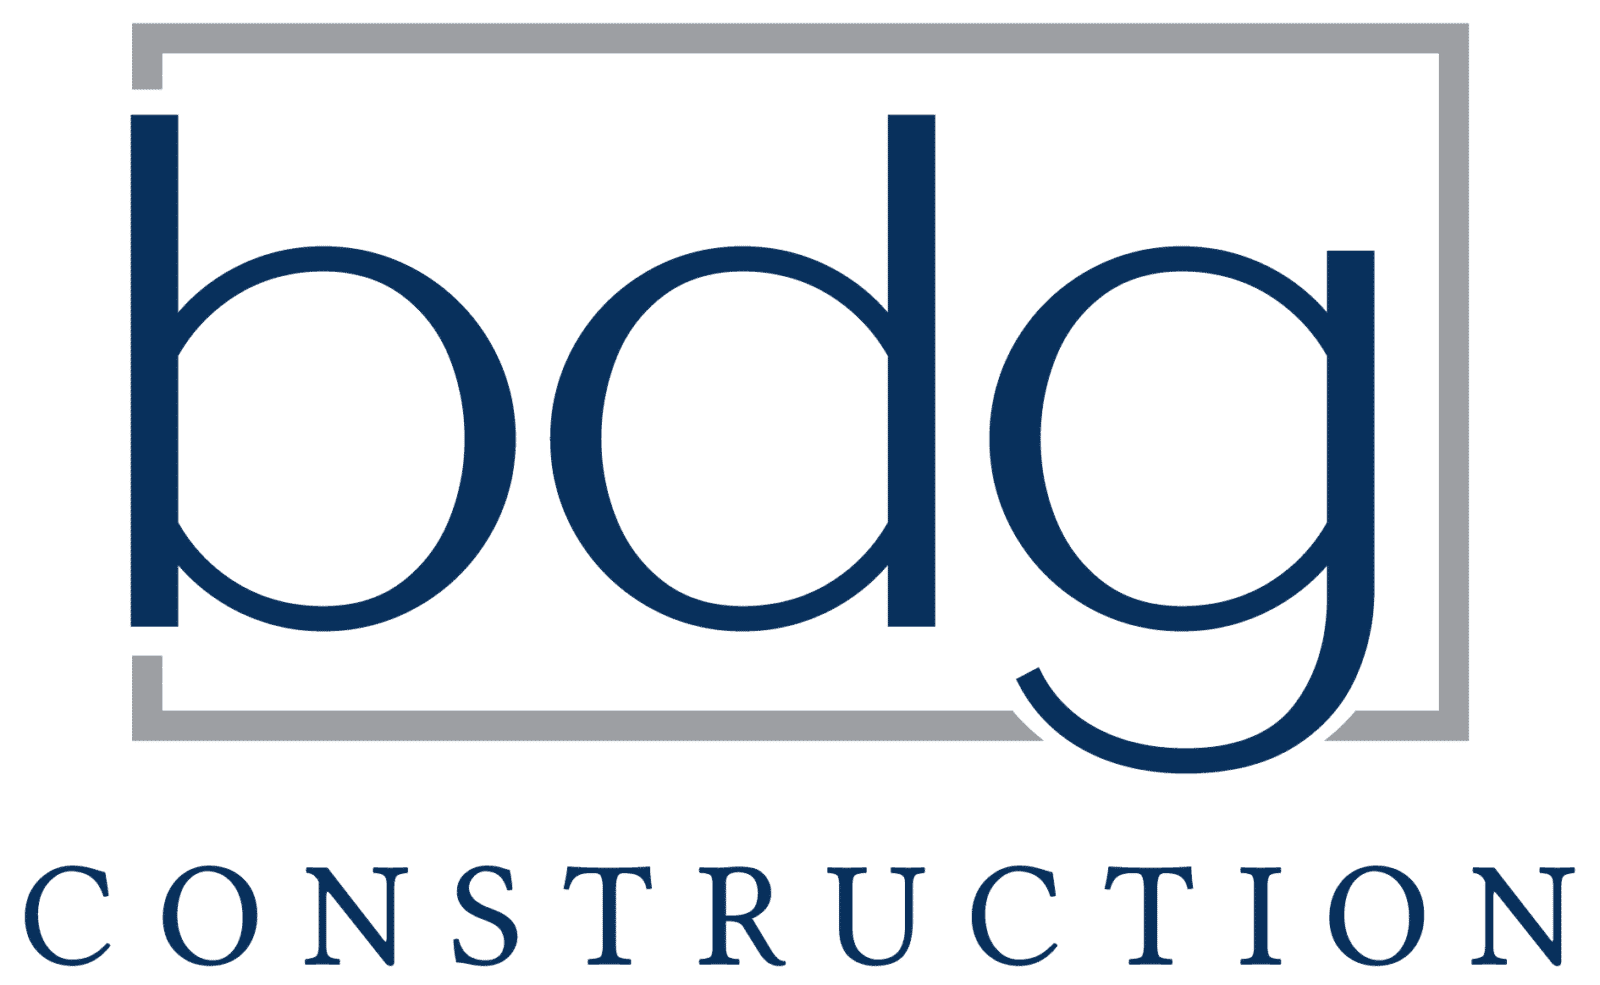 Baker Design Group - Introducing BDG Construction